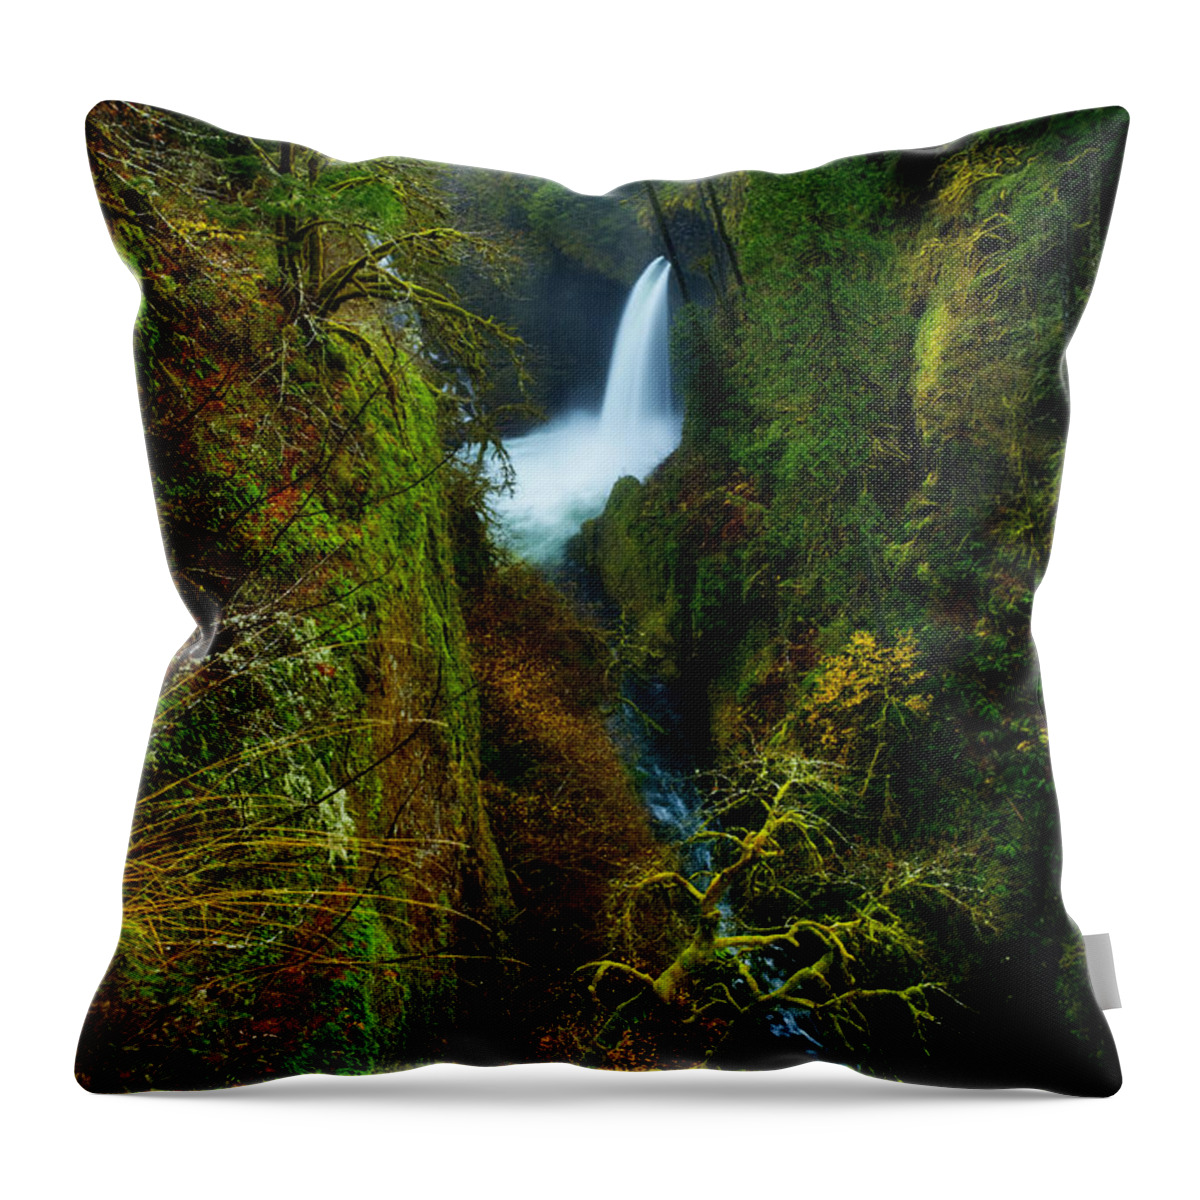 Lush Throw Pillow featuring the photograph Metlako Falls by Darren White